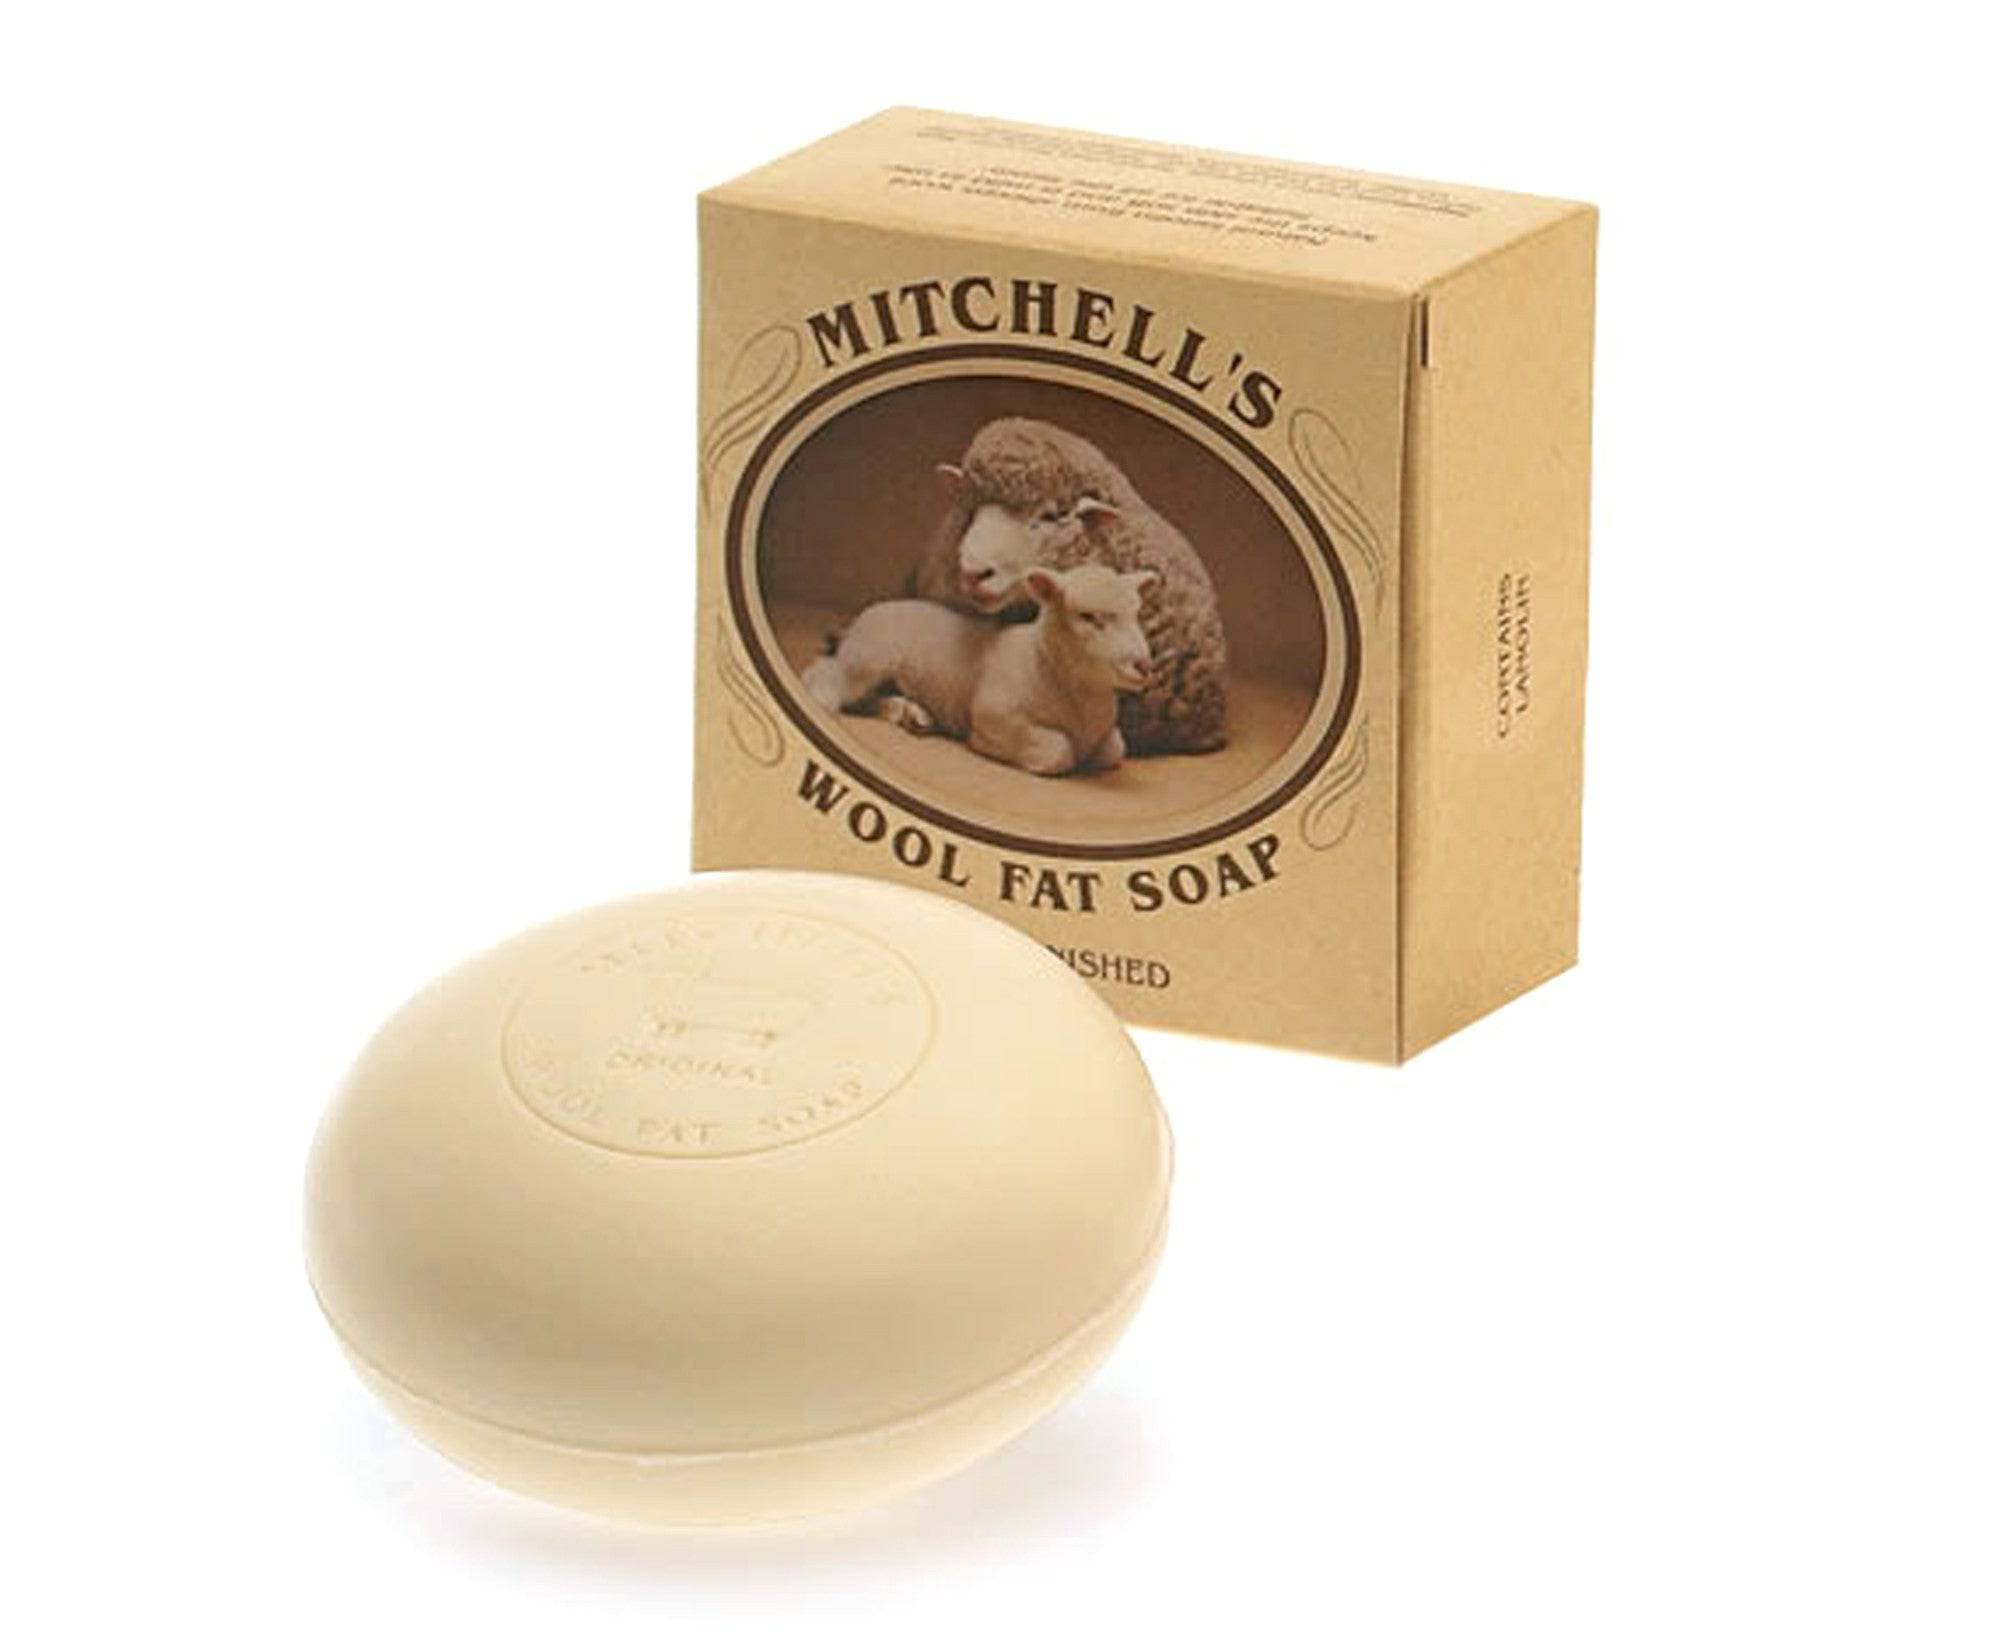 Mitchells Fine English Soap Single Round Bar - World of Wool